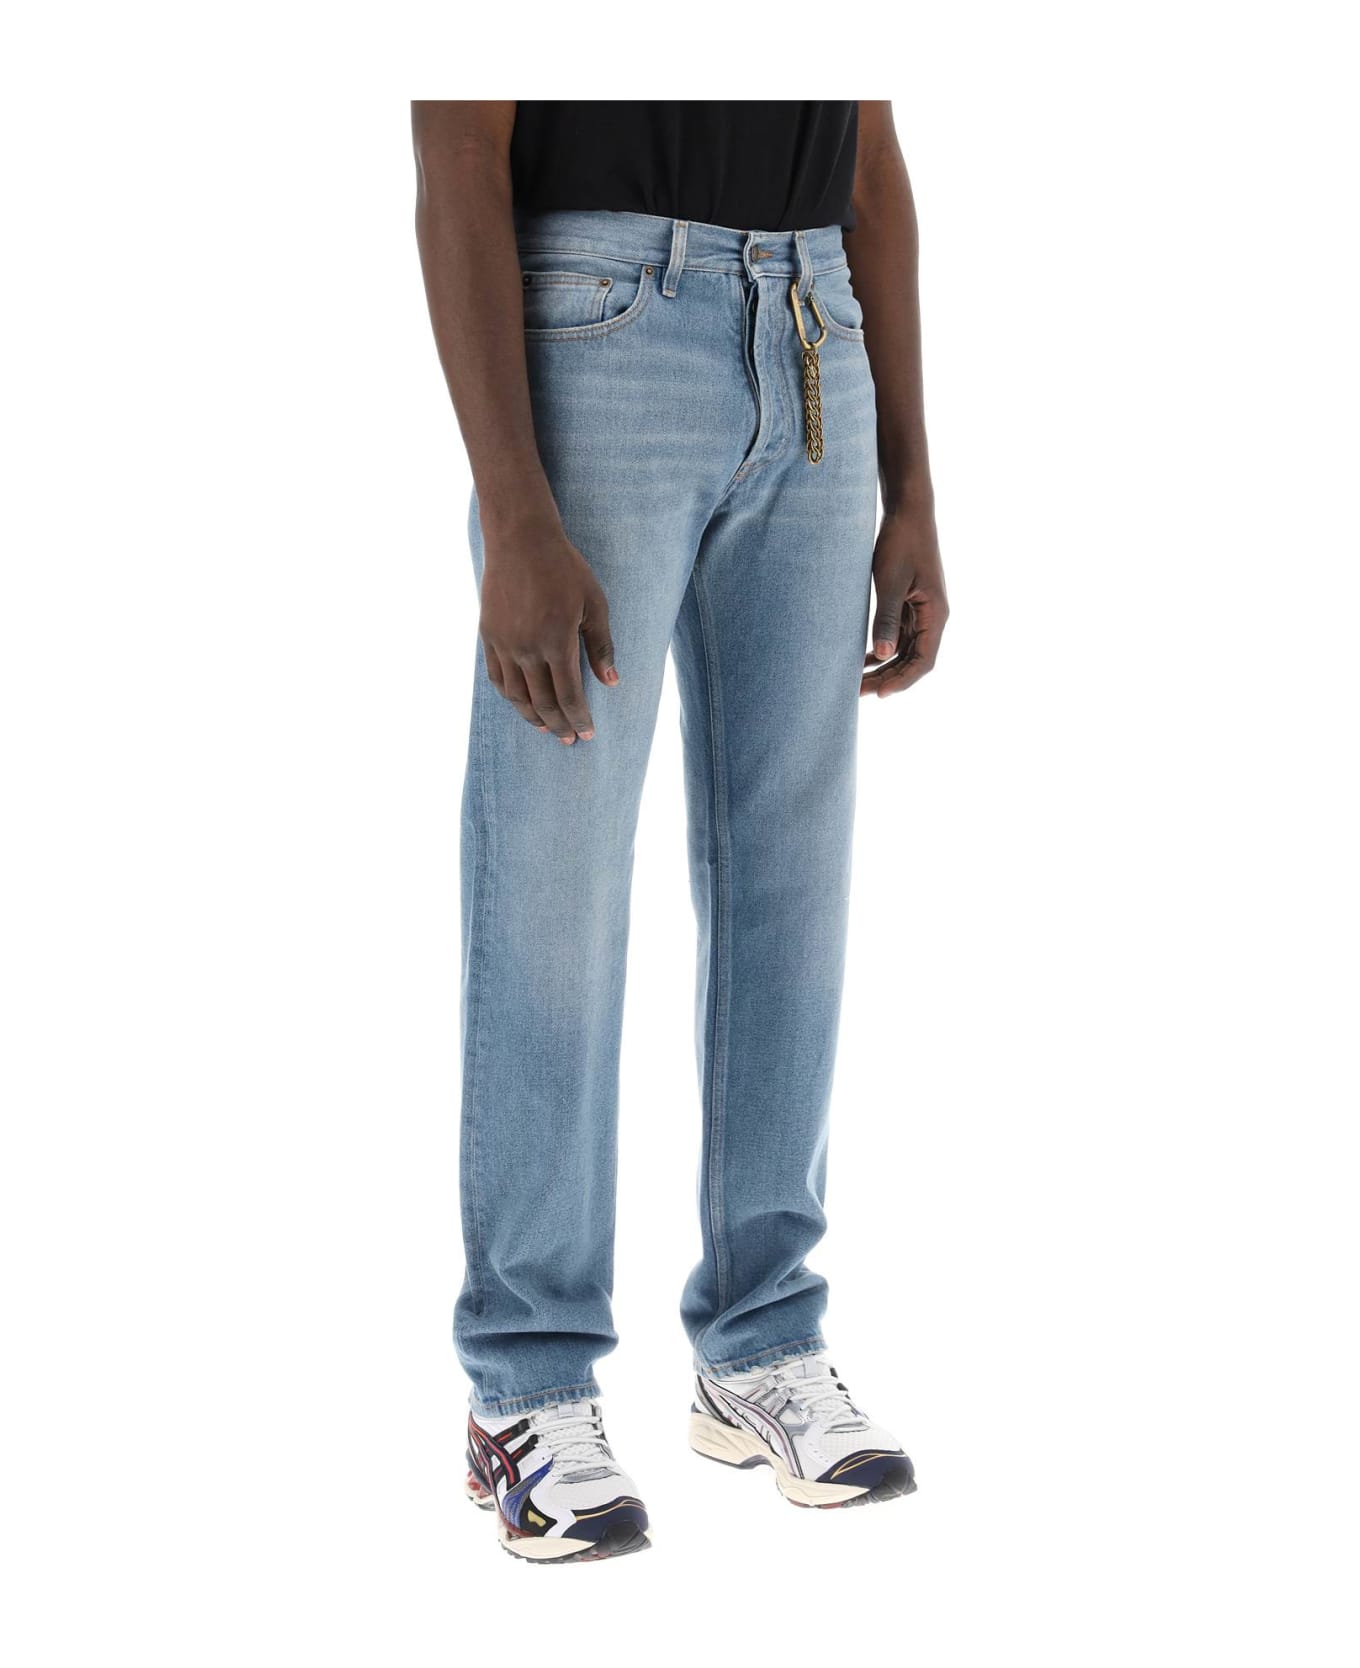 DARKPARK Larry Straight Cut Jeans - Full Blue デニム